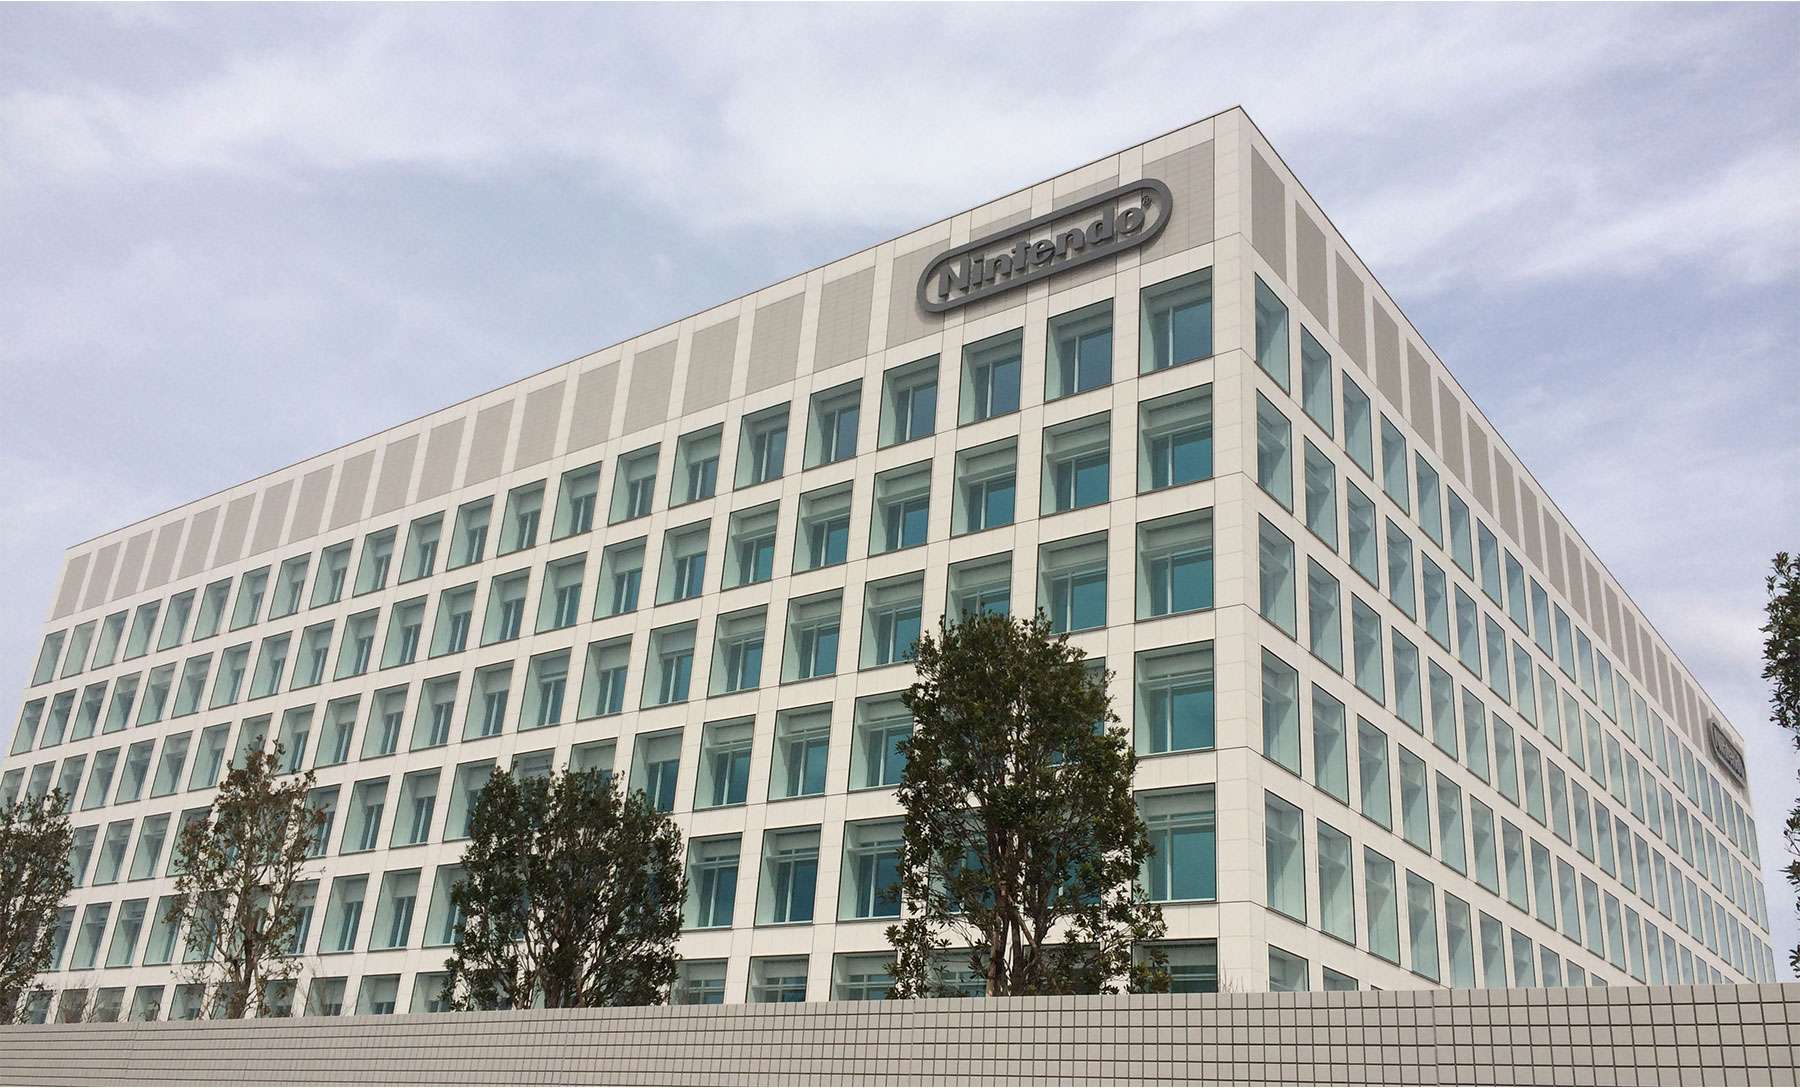 Nintendo’s headquarters in Kyoto.